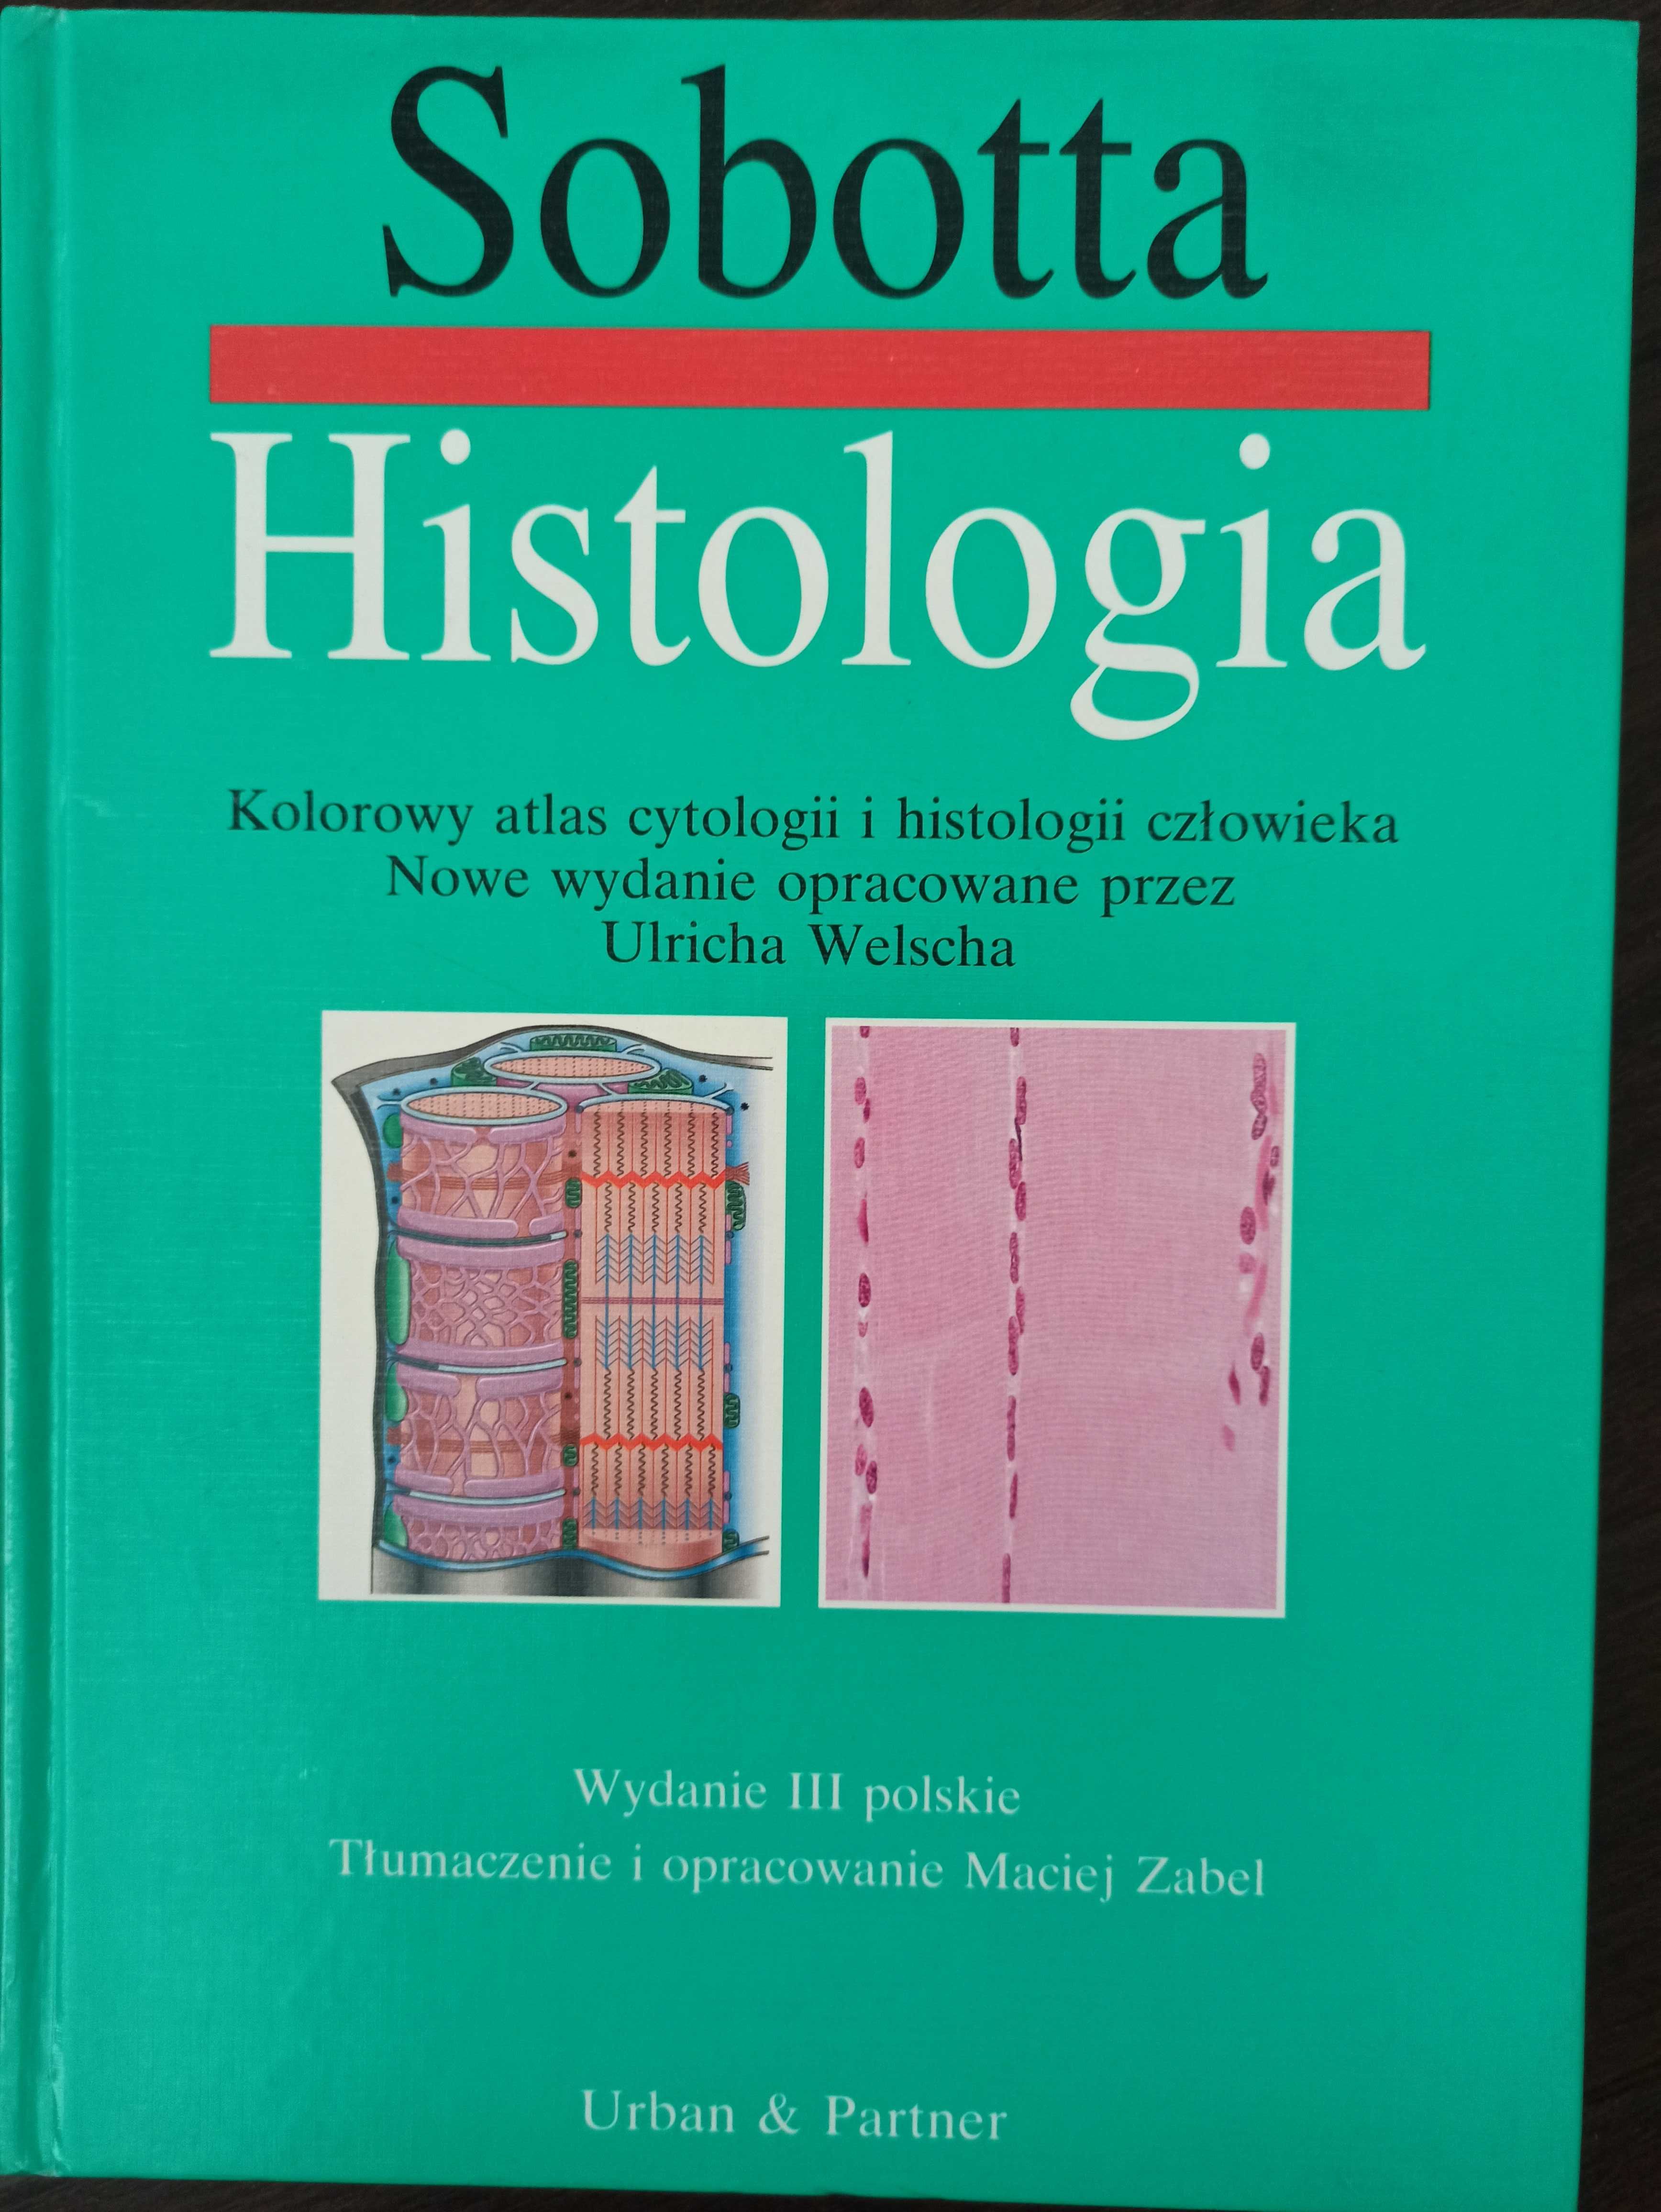 Atlas cytologii i histologii człowieka Sobotta